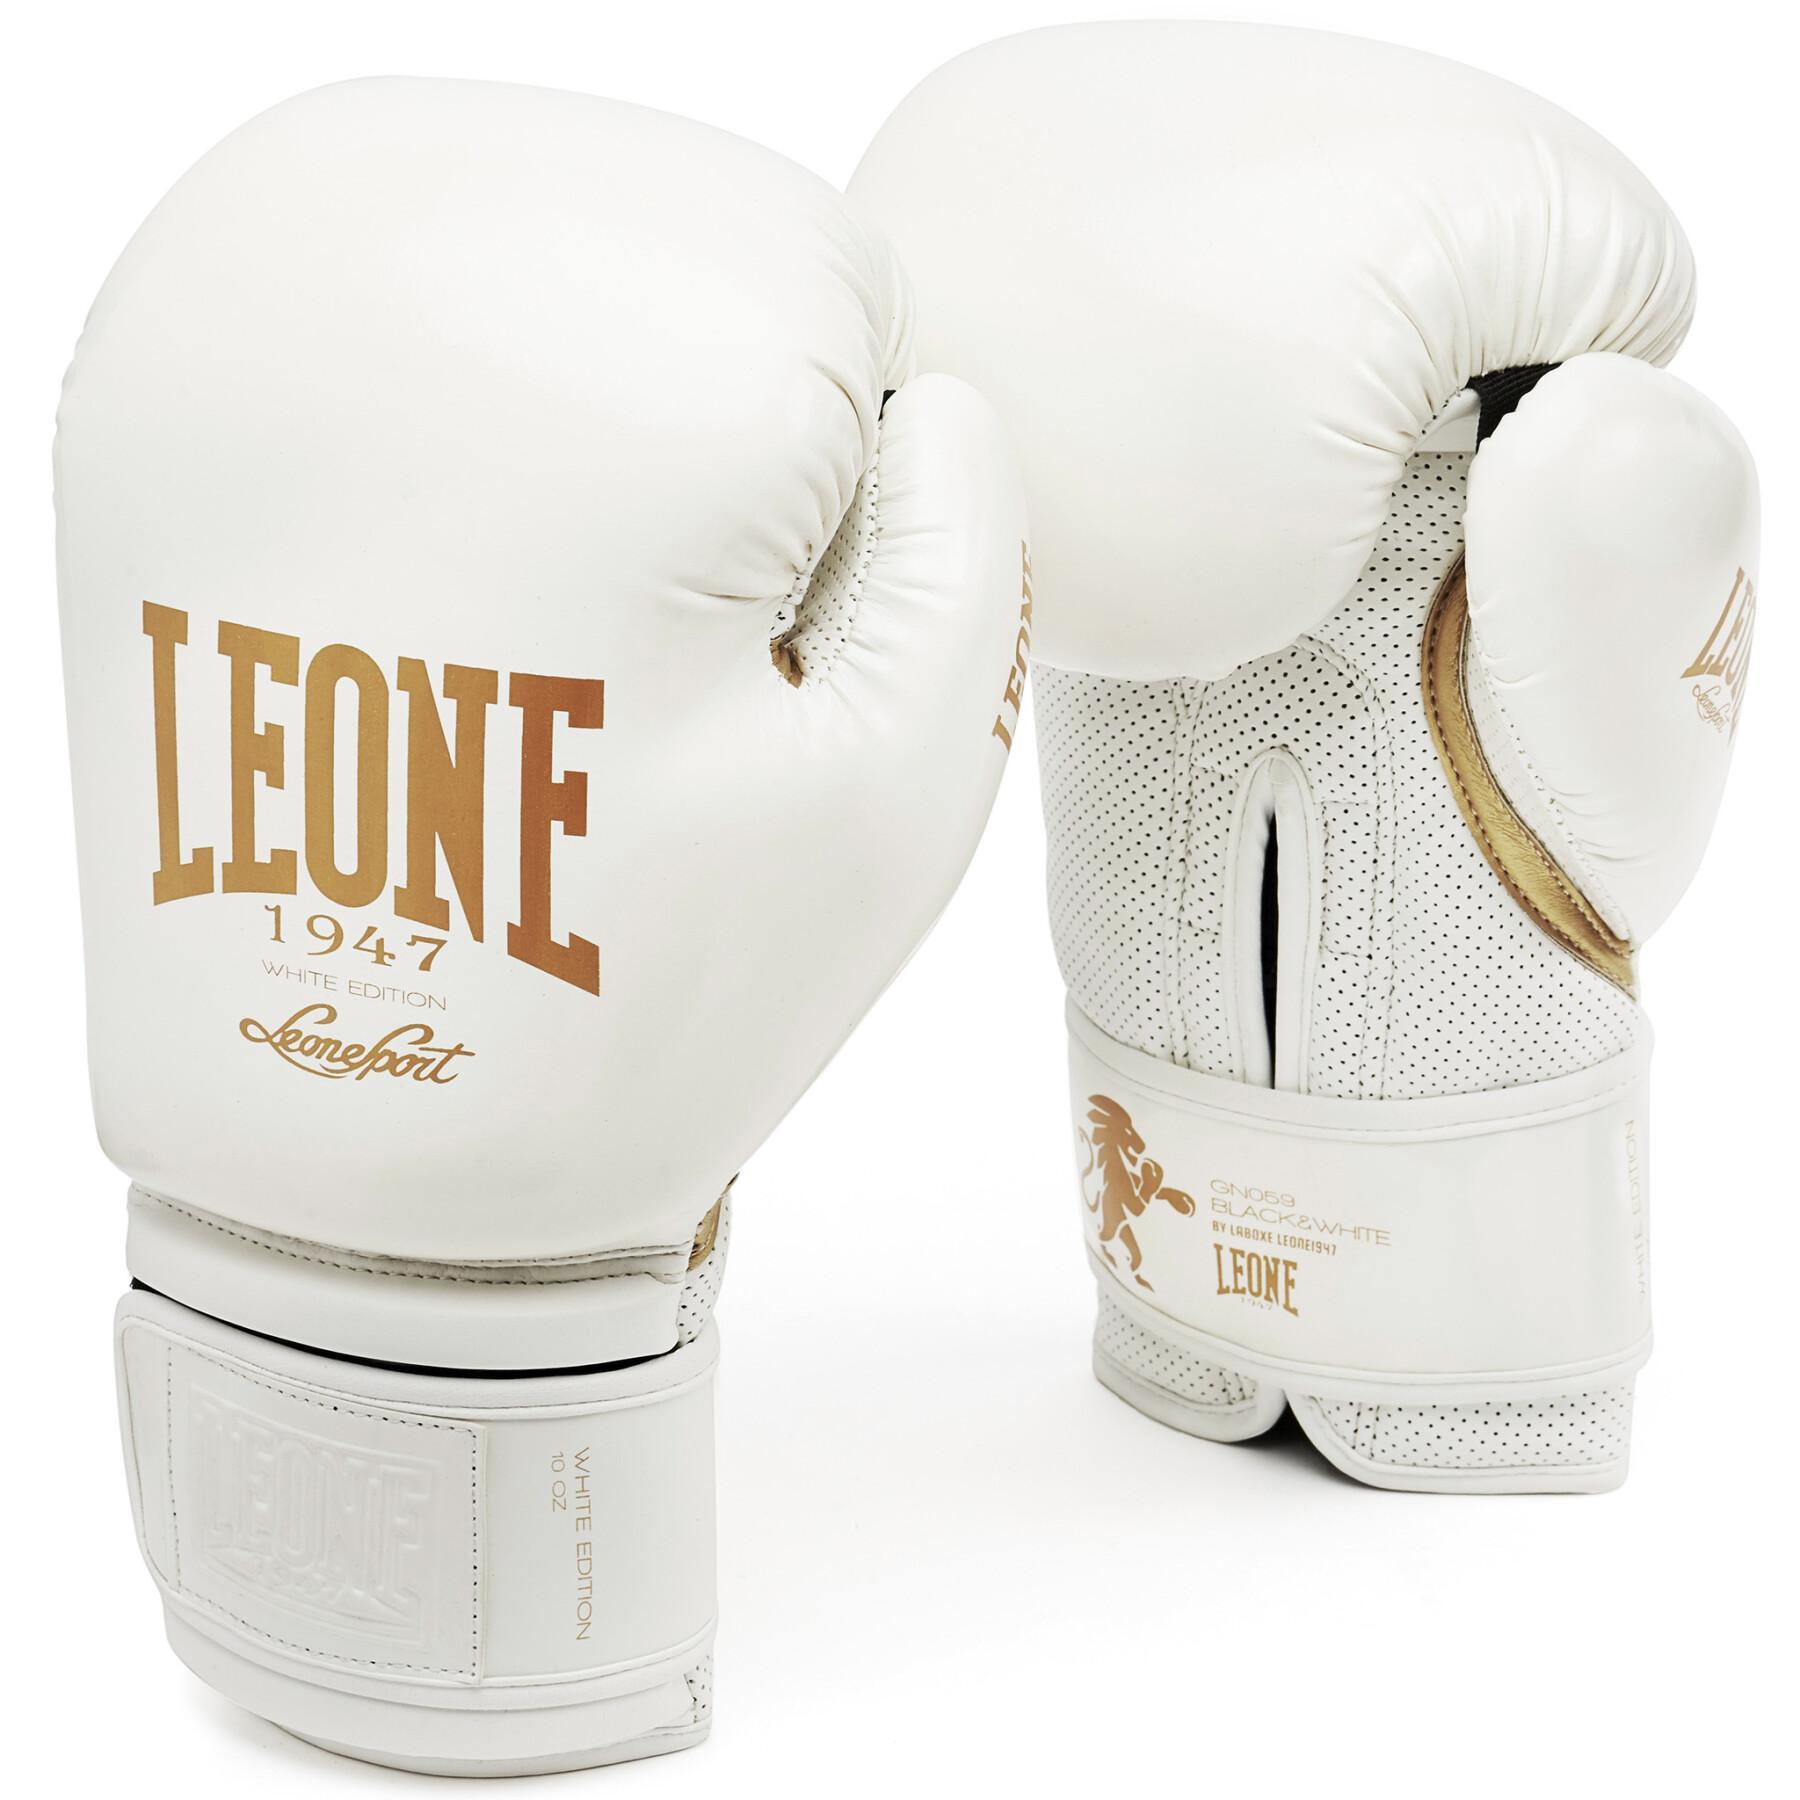 Black and white boxing gloves Leone 16 oz